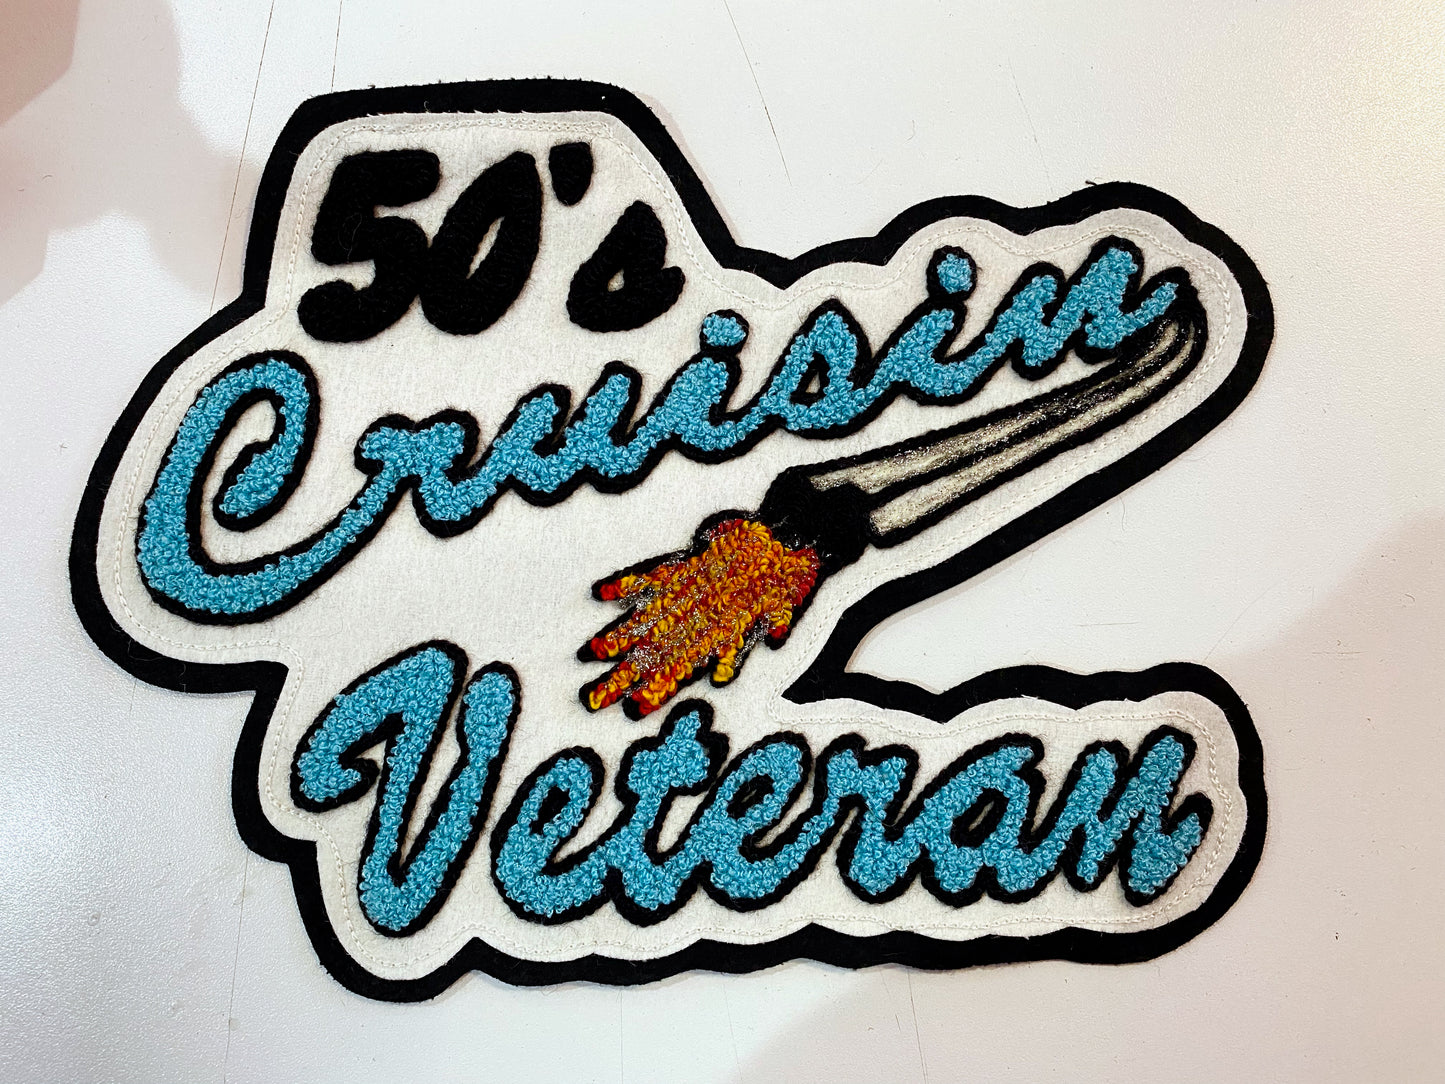 50's Cruisin' Veteran Sow On Patch